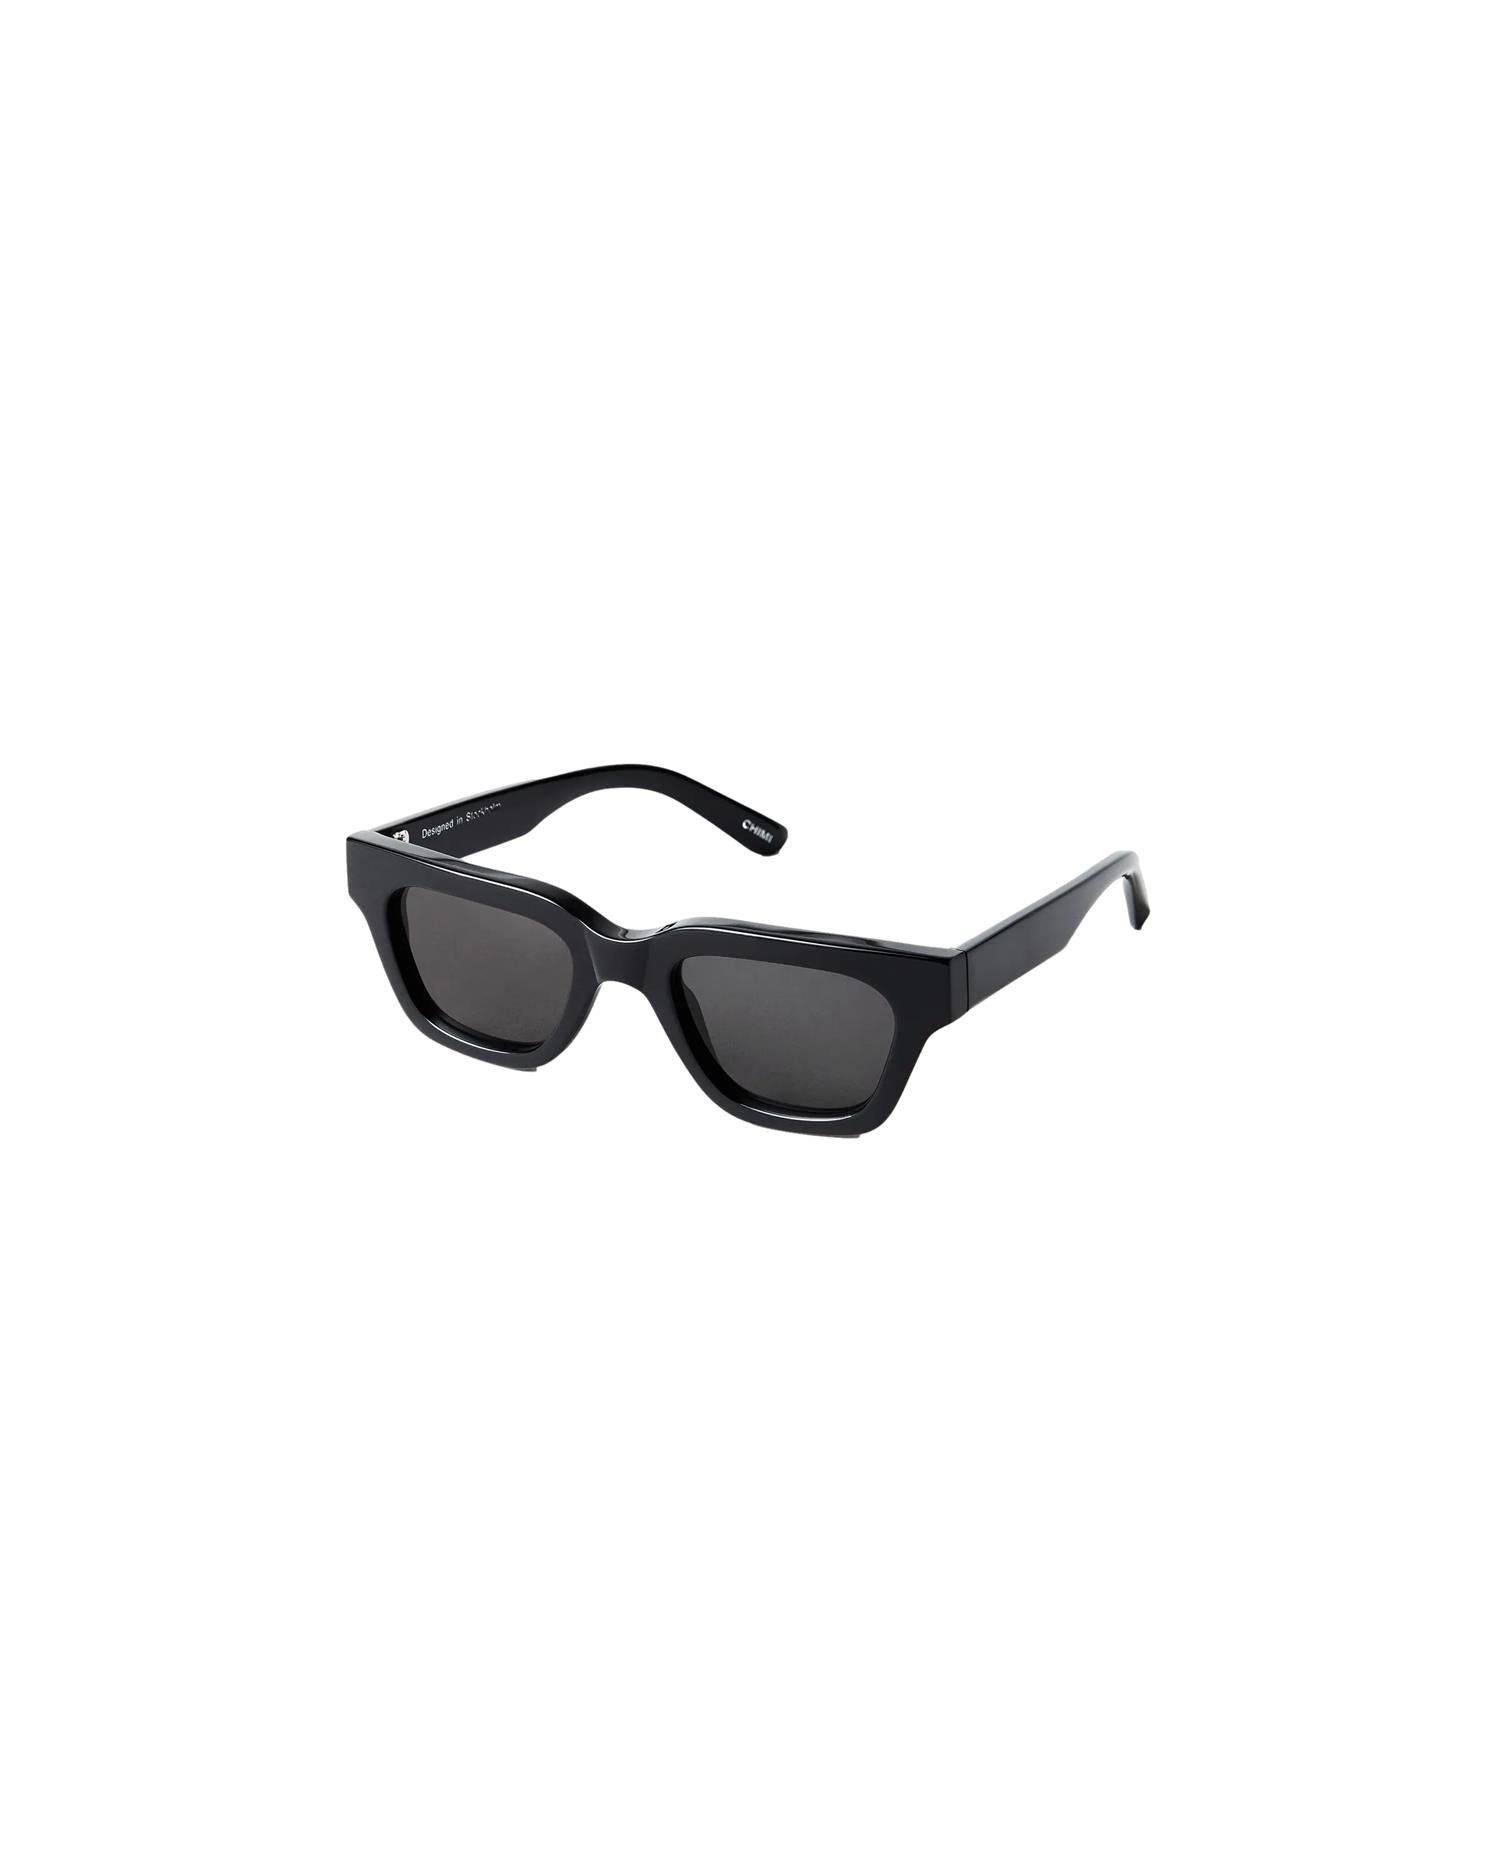 Shop Chimi Eyewear 11 Black Solbriller Sort her - Norsk, rask levering ikkebutikk.no